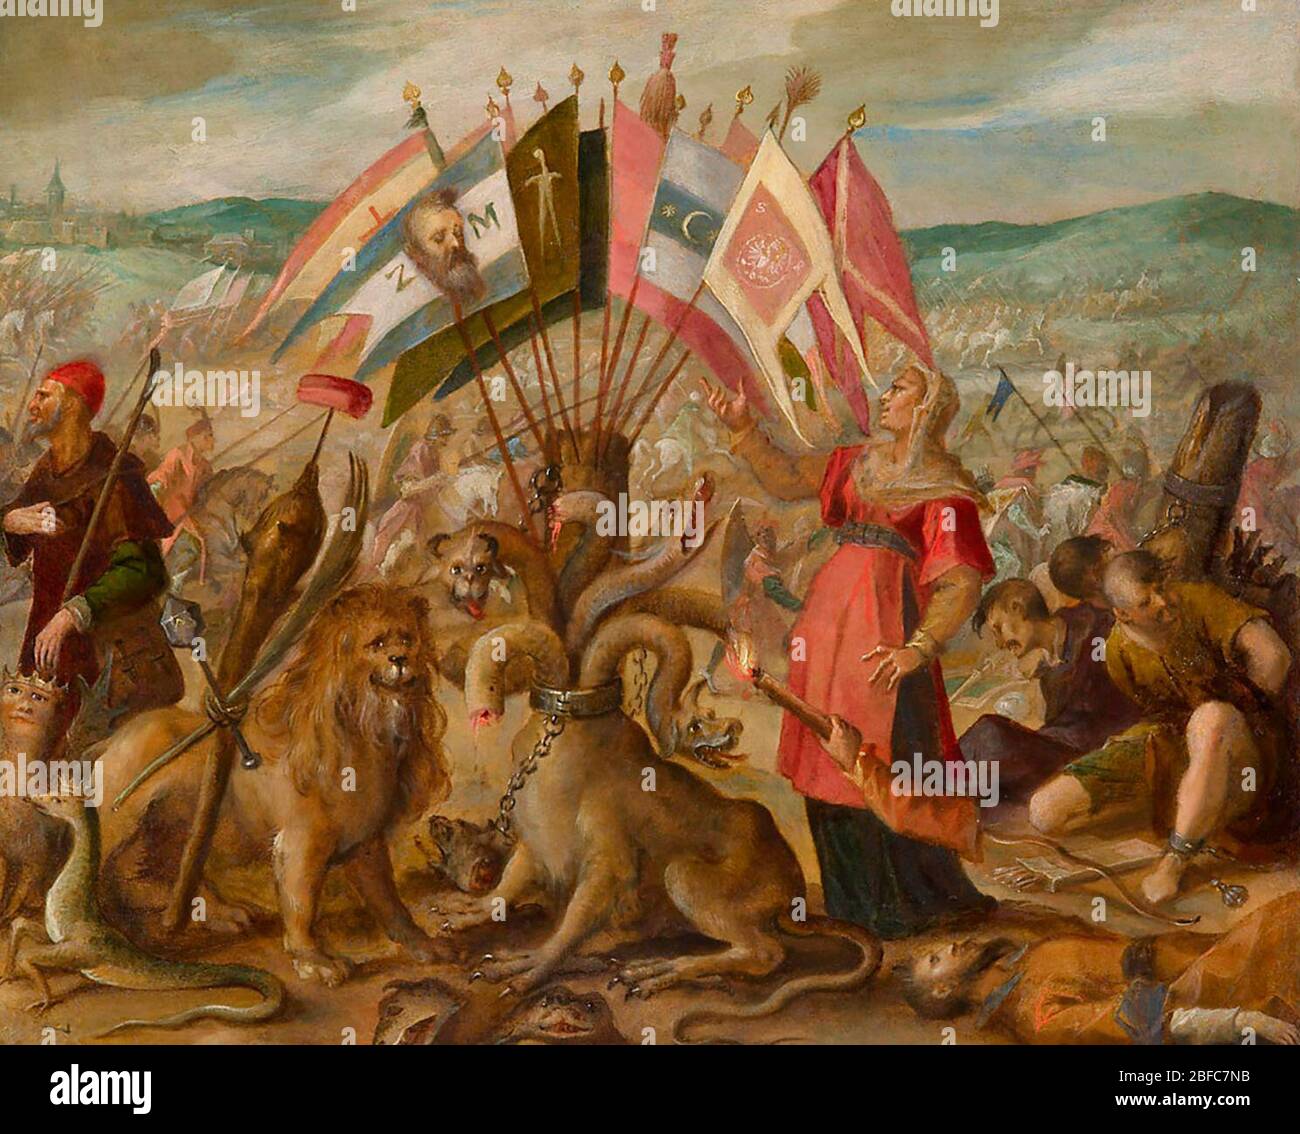 Allegoria della guerra turca - Battaglia di Kronstadt - Hans von Aachen, circa 1603 Foto Stock